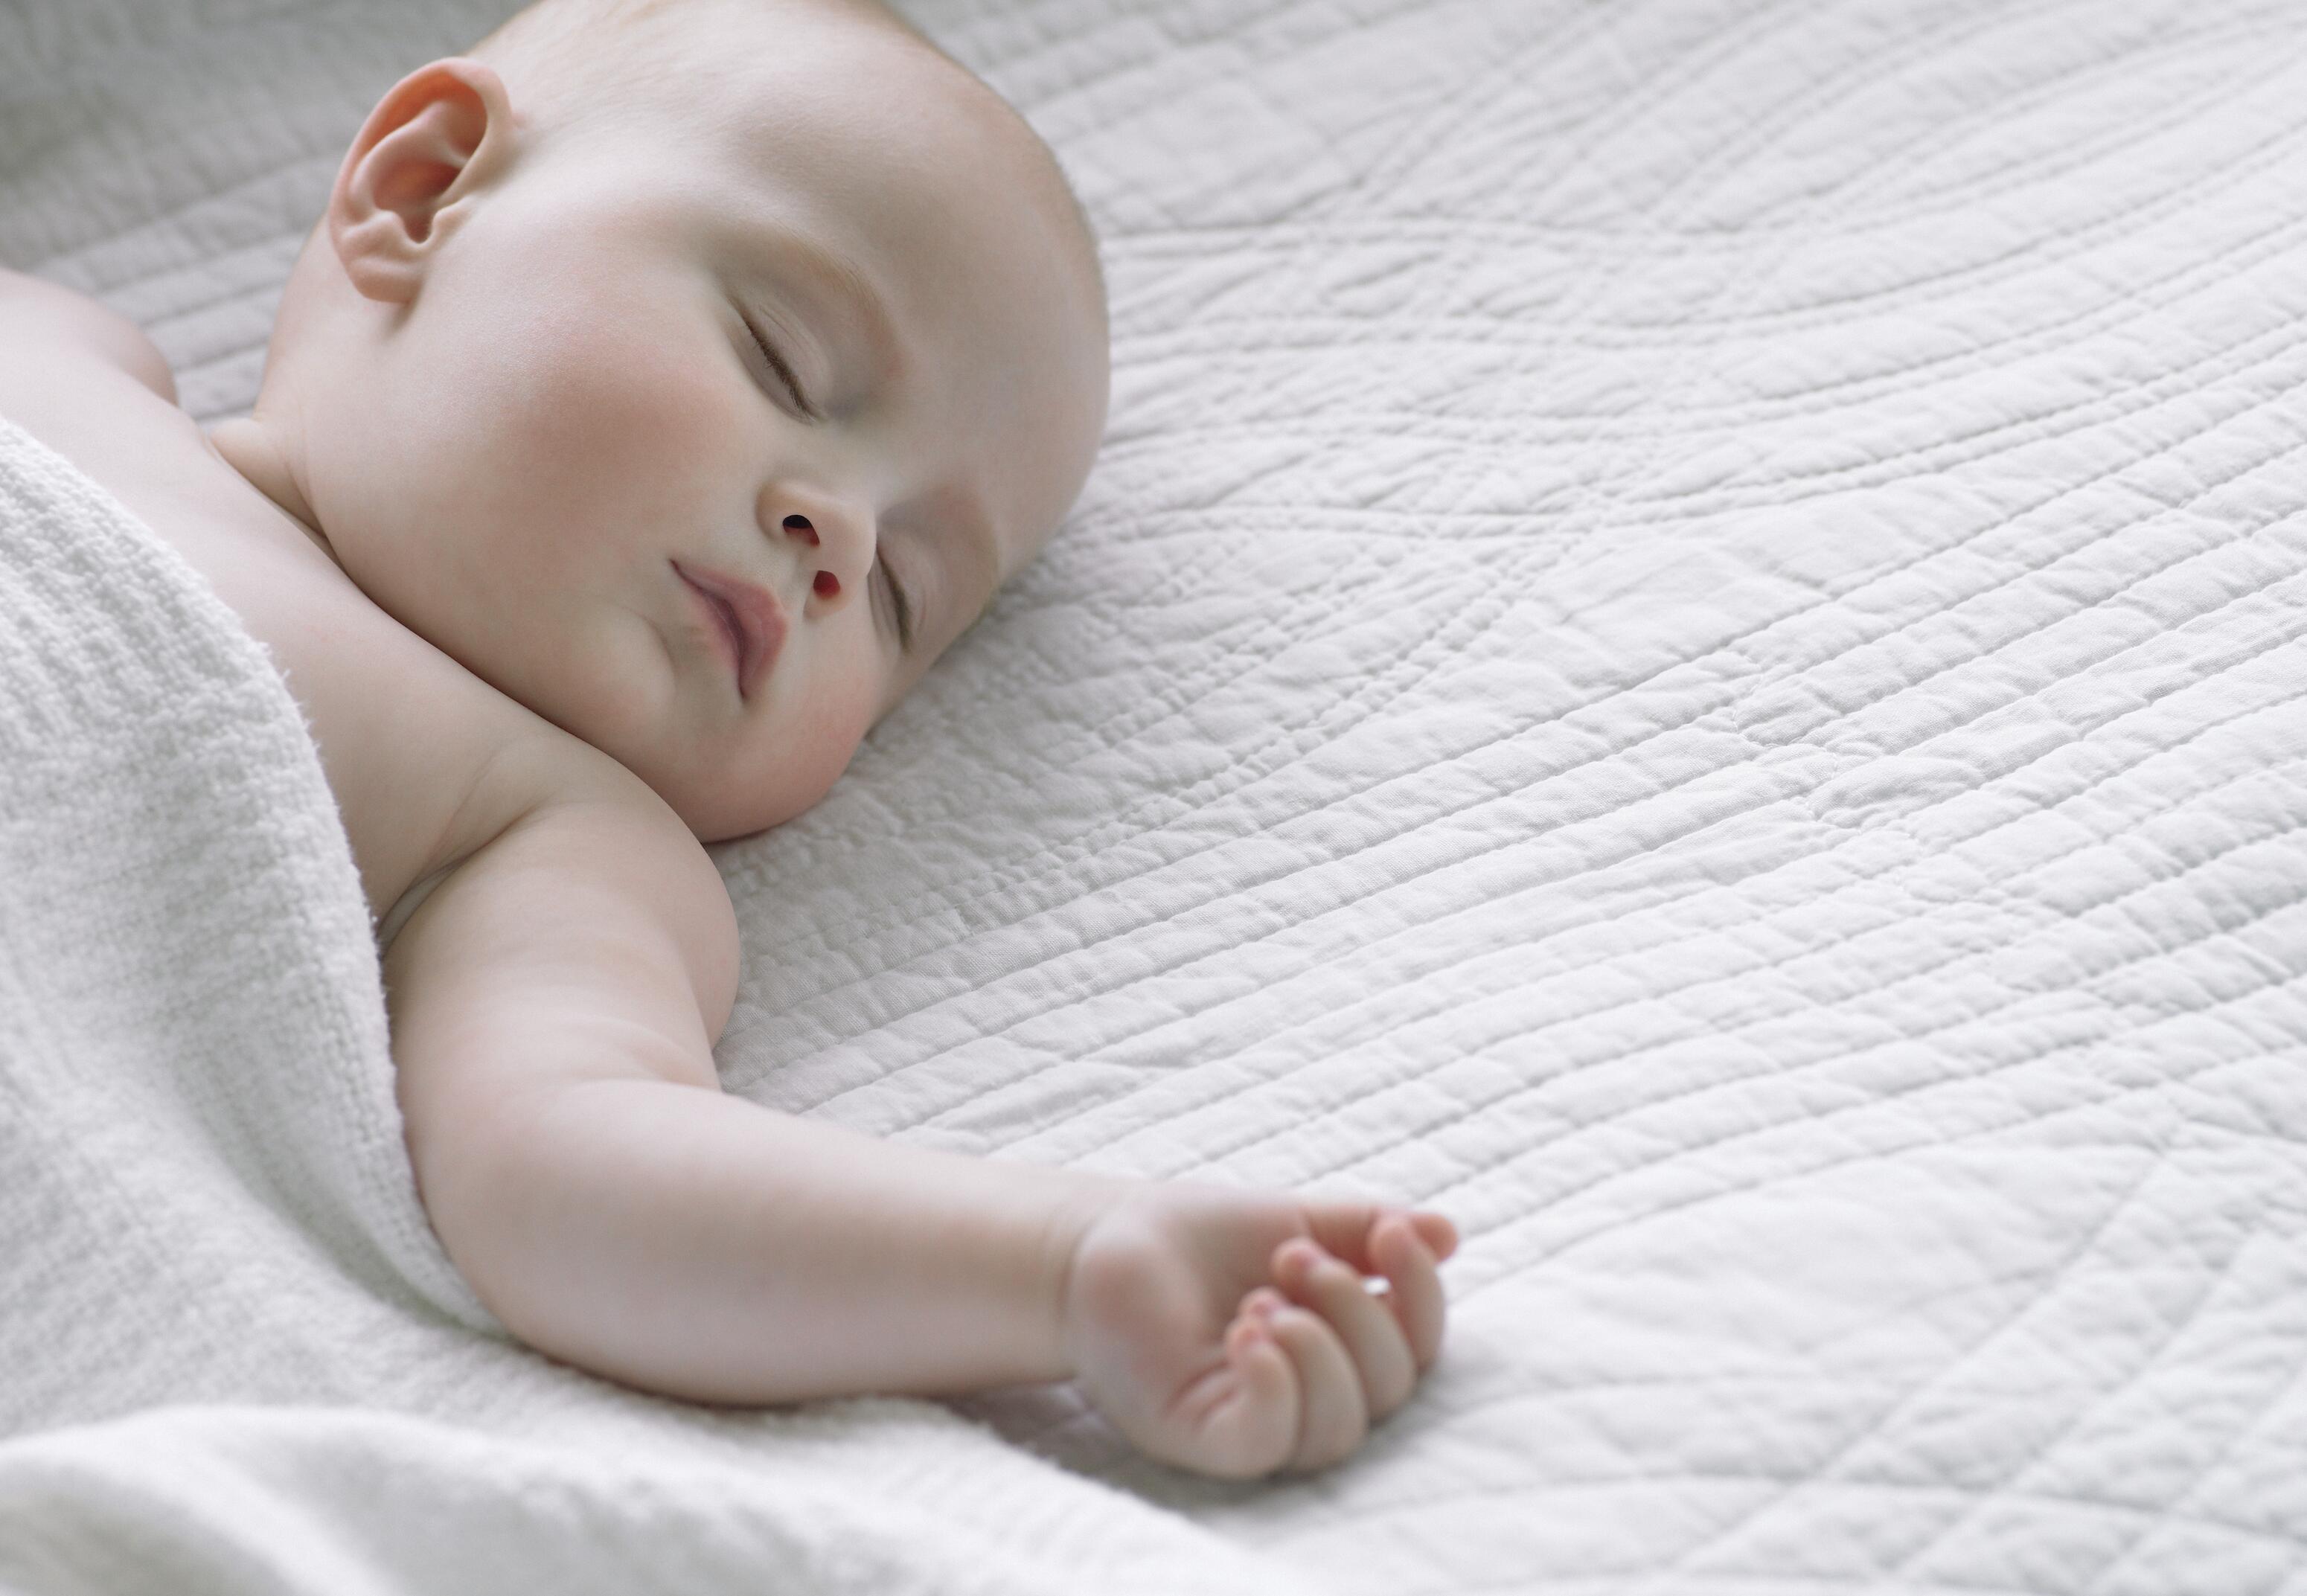 aider-bebe-a-bien-dormir-getty-images